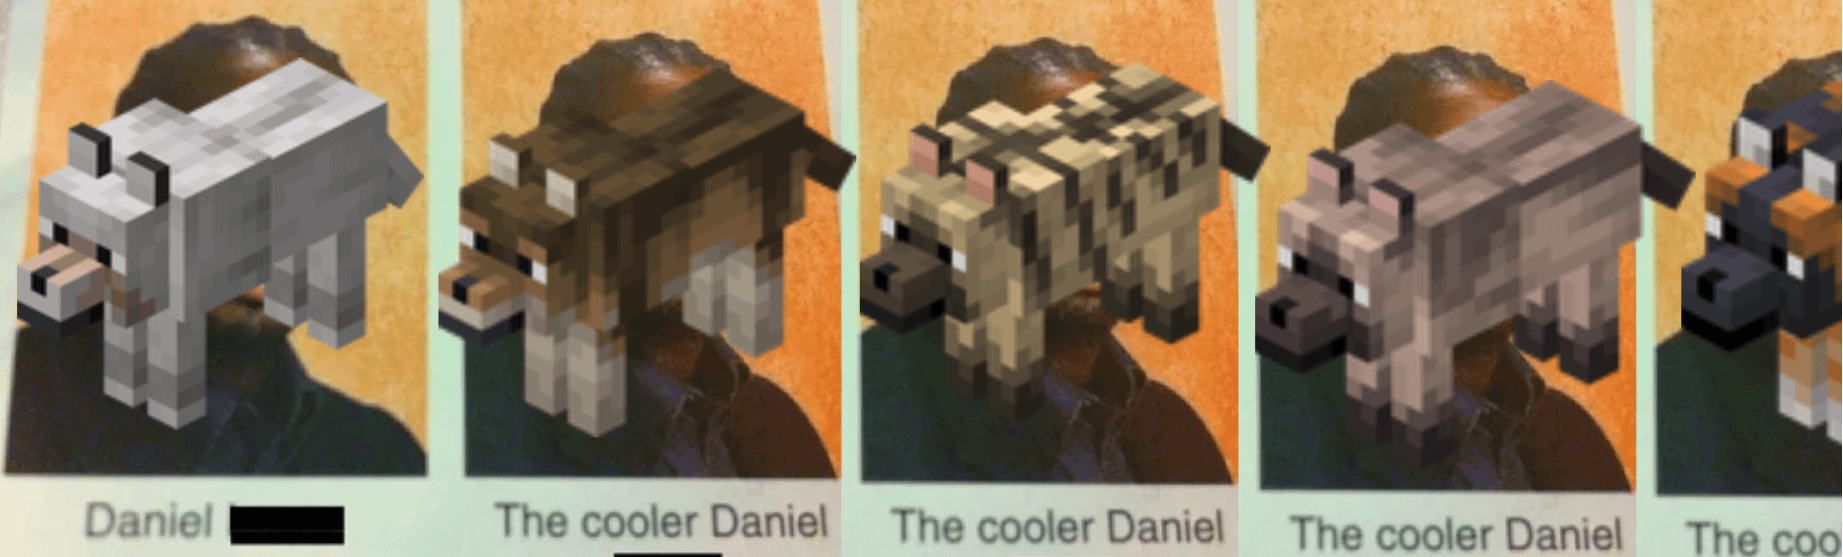 Minecraft Memes - Mineplex overflowing with 9 minigames